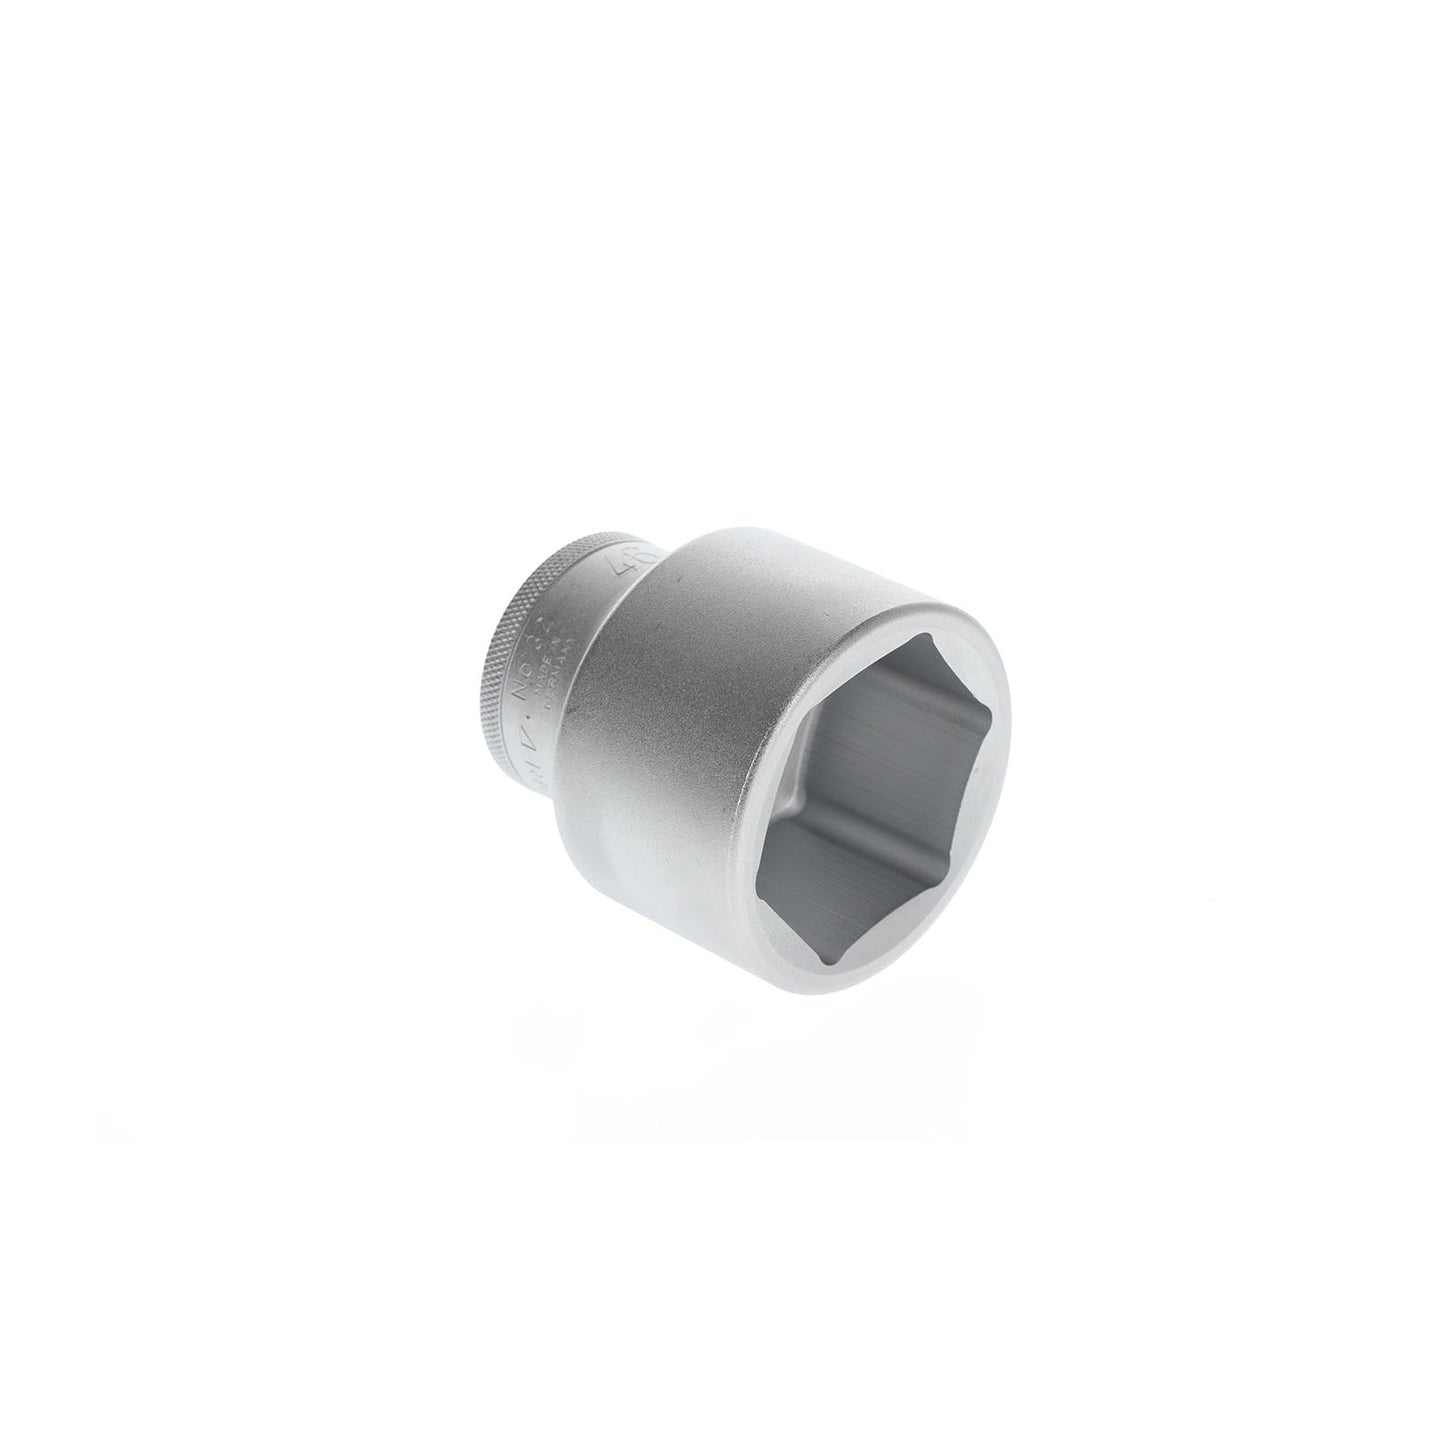 GEDORE 32 46 - Hexagonal socket 3/4", 46 mm (6271270)